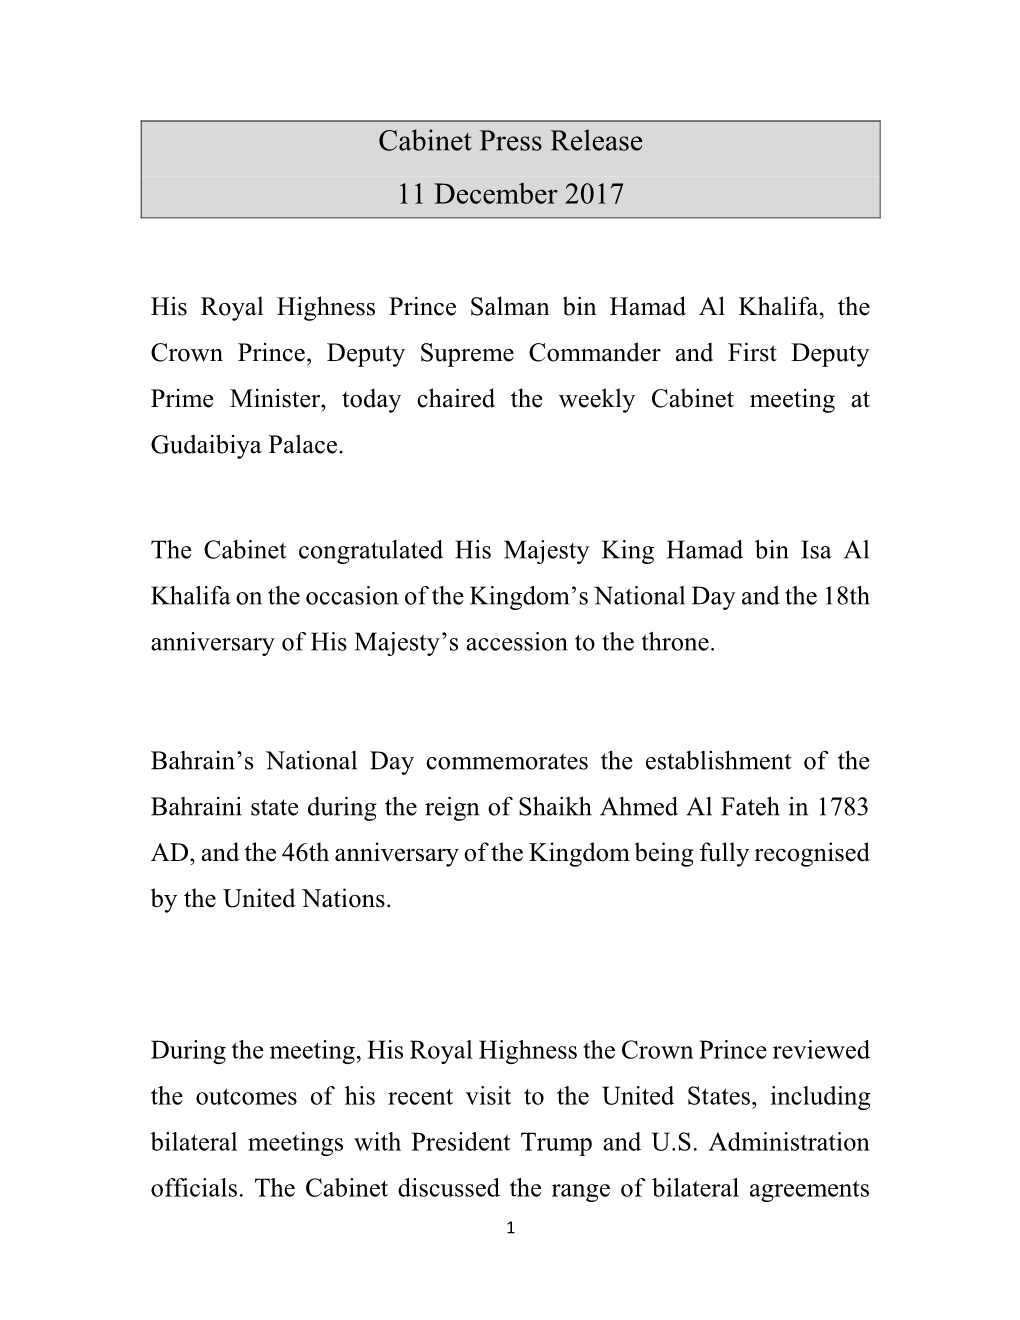 Cabinet Press Release 11 December 2017